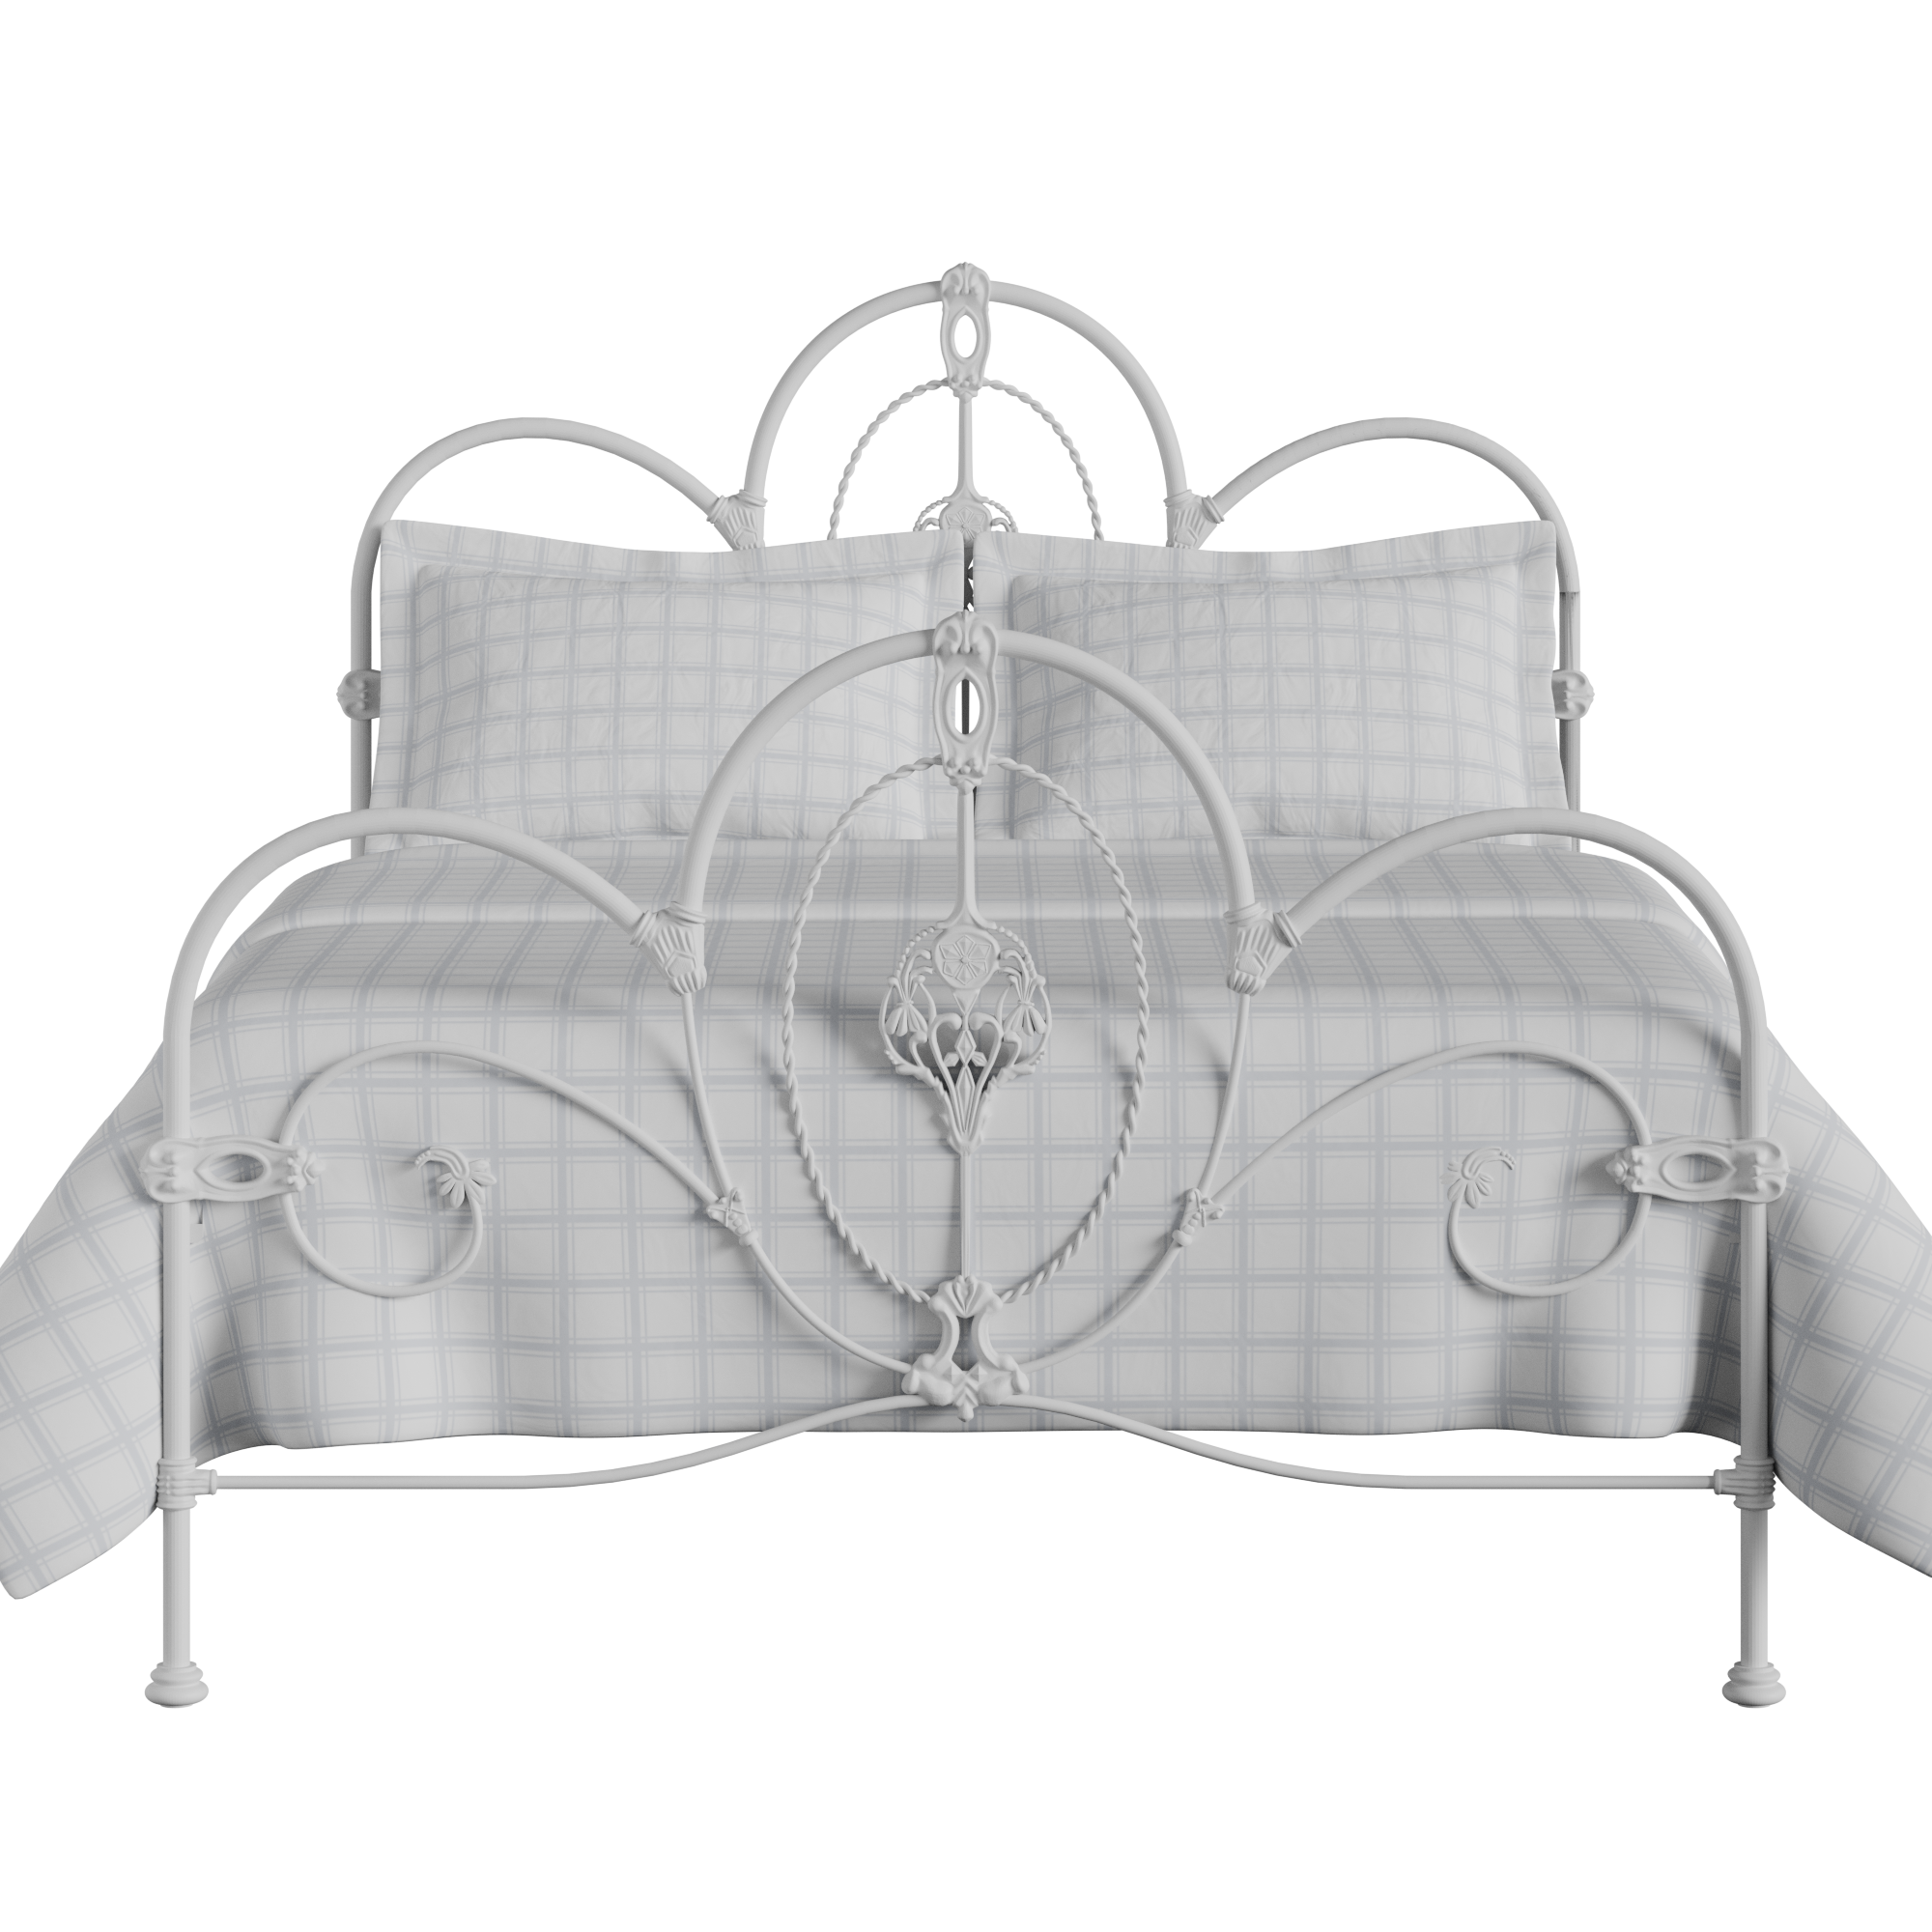 Ballina iron/metal bed in white